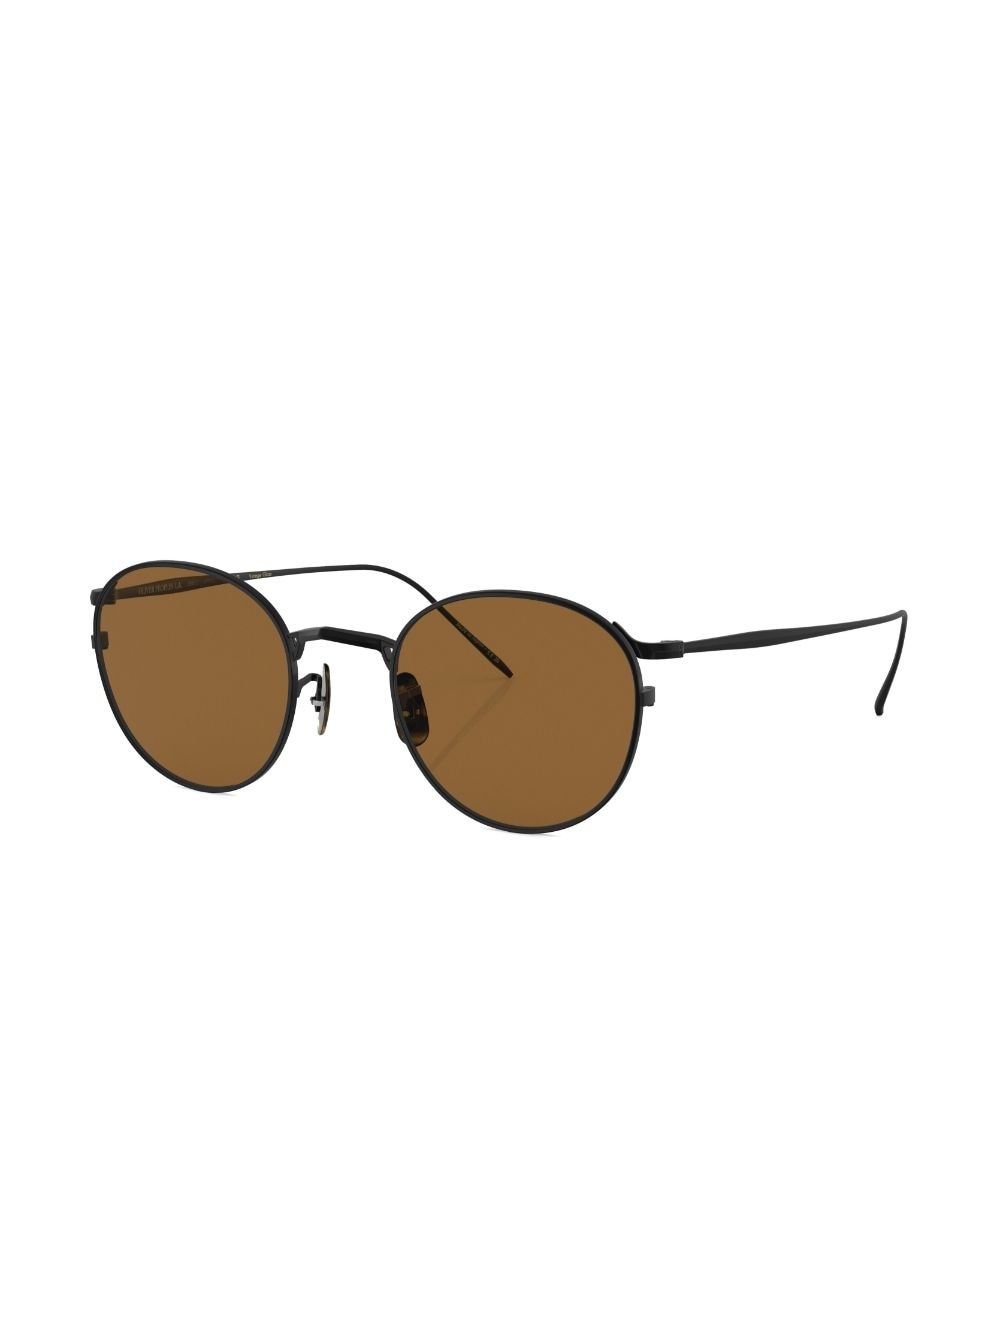 G Ponti-4 round-frame sunglasses - 2